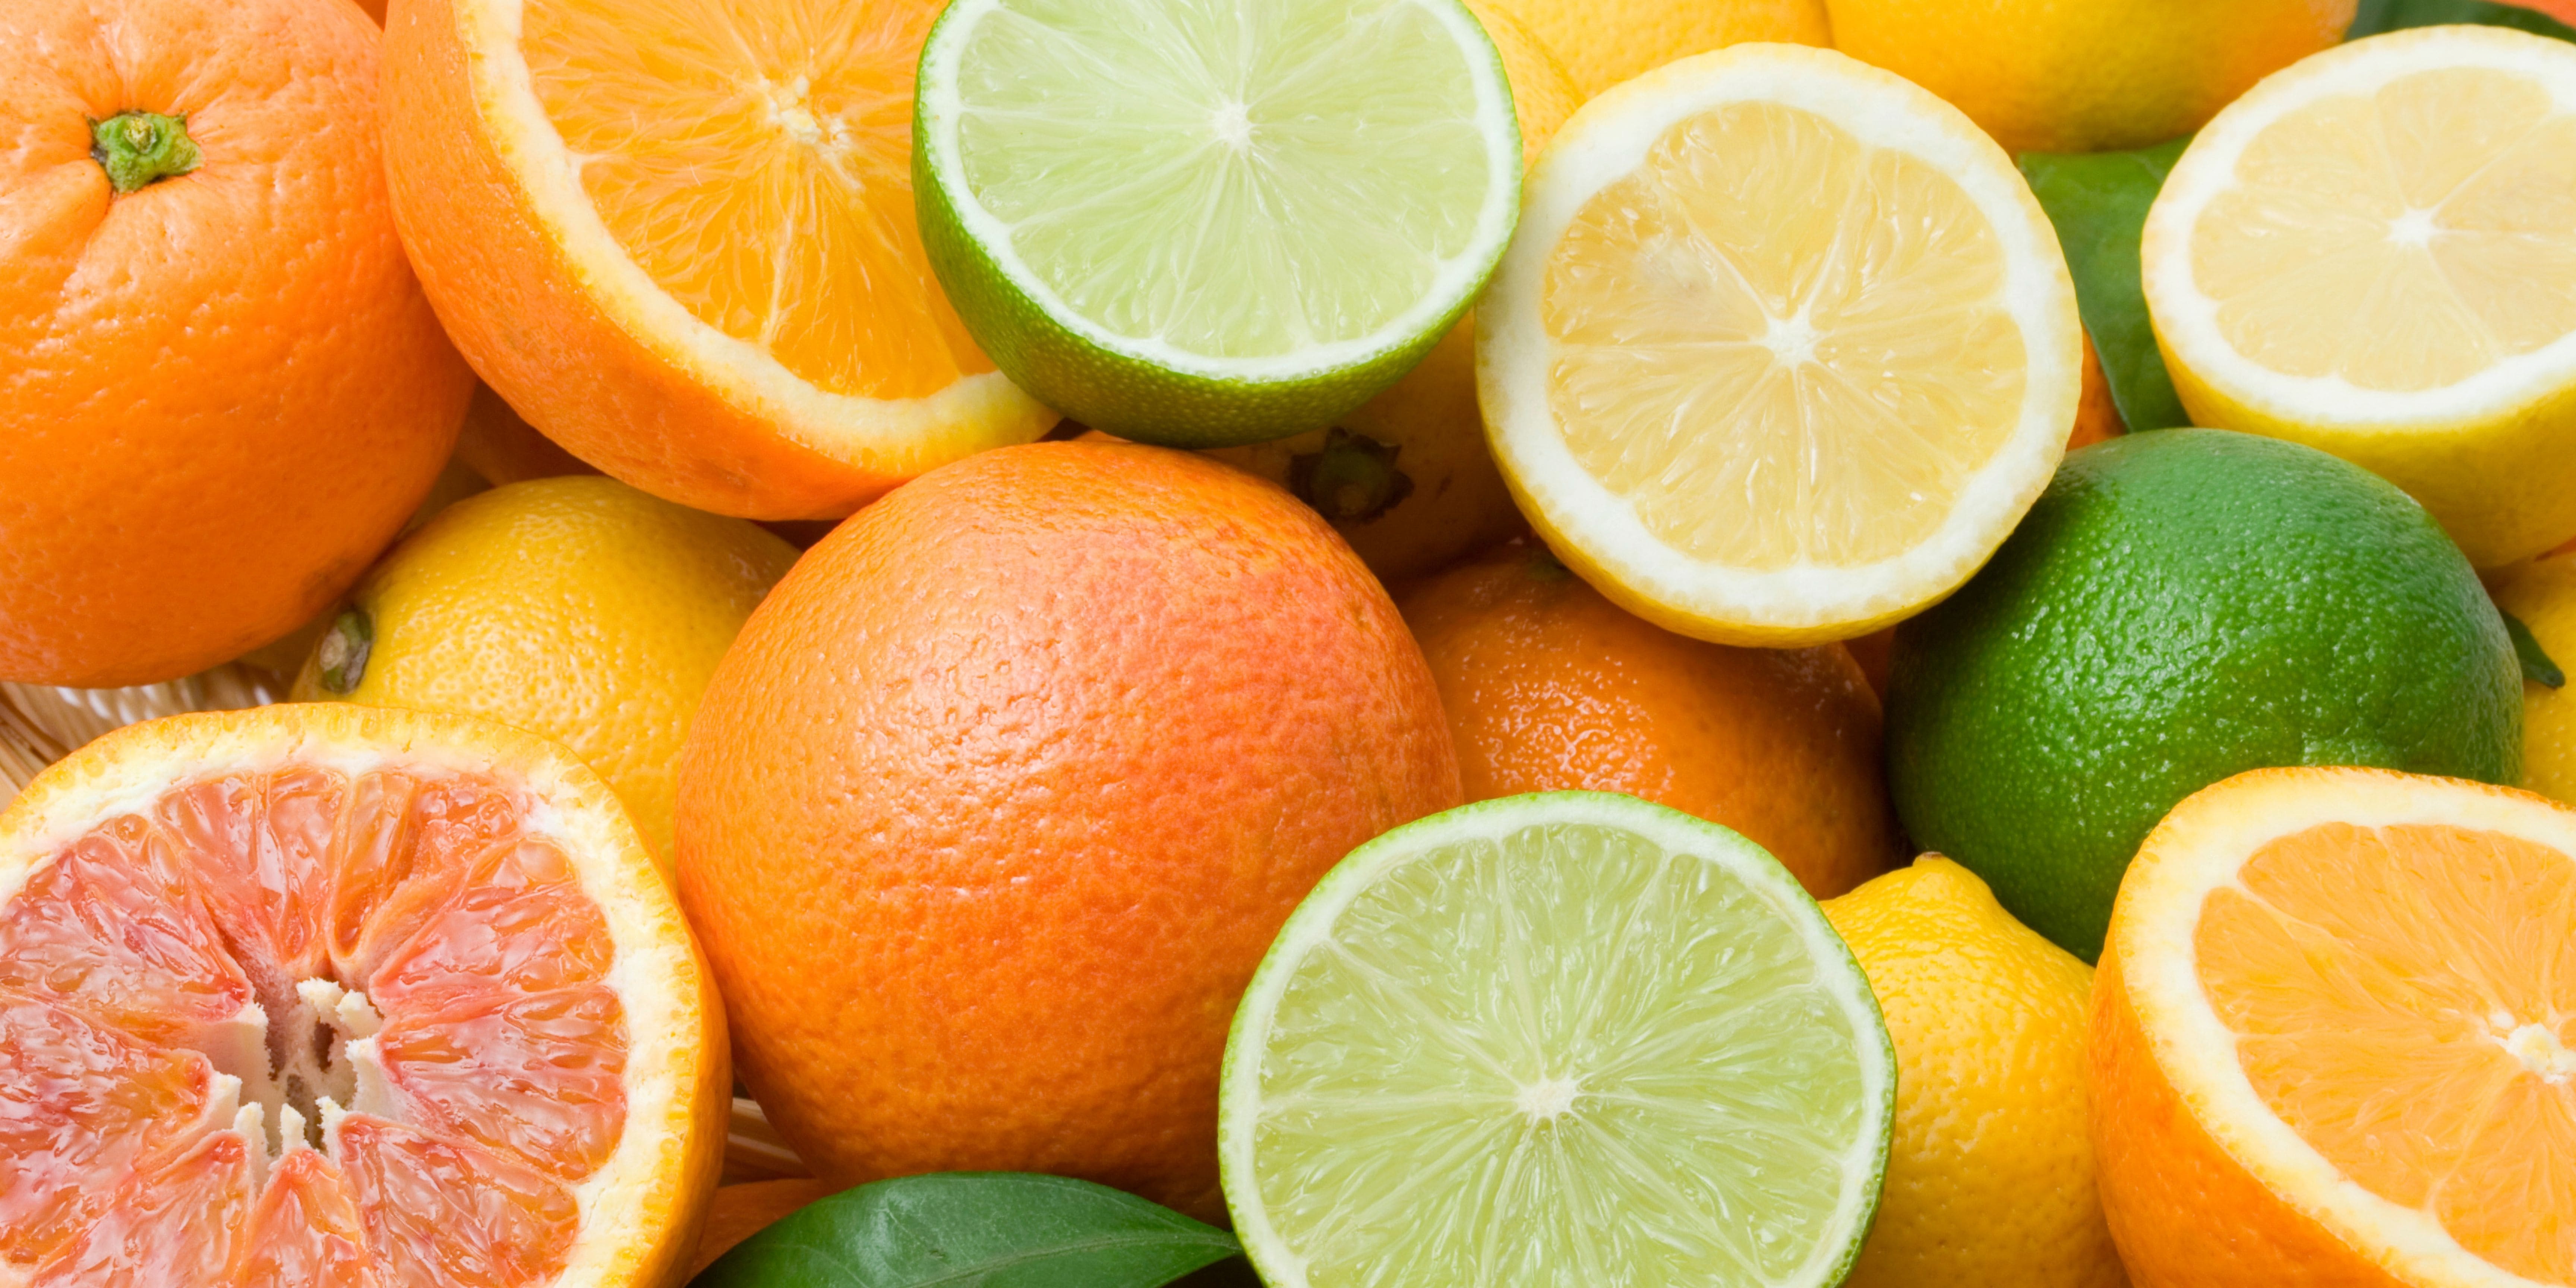 Citrus fruits including limes, lemon, grapefruit, oranges and easy peelers.